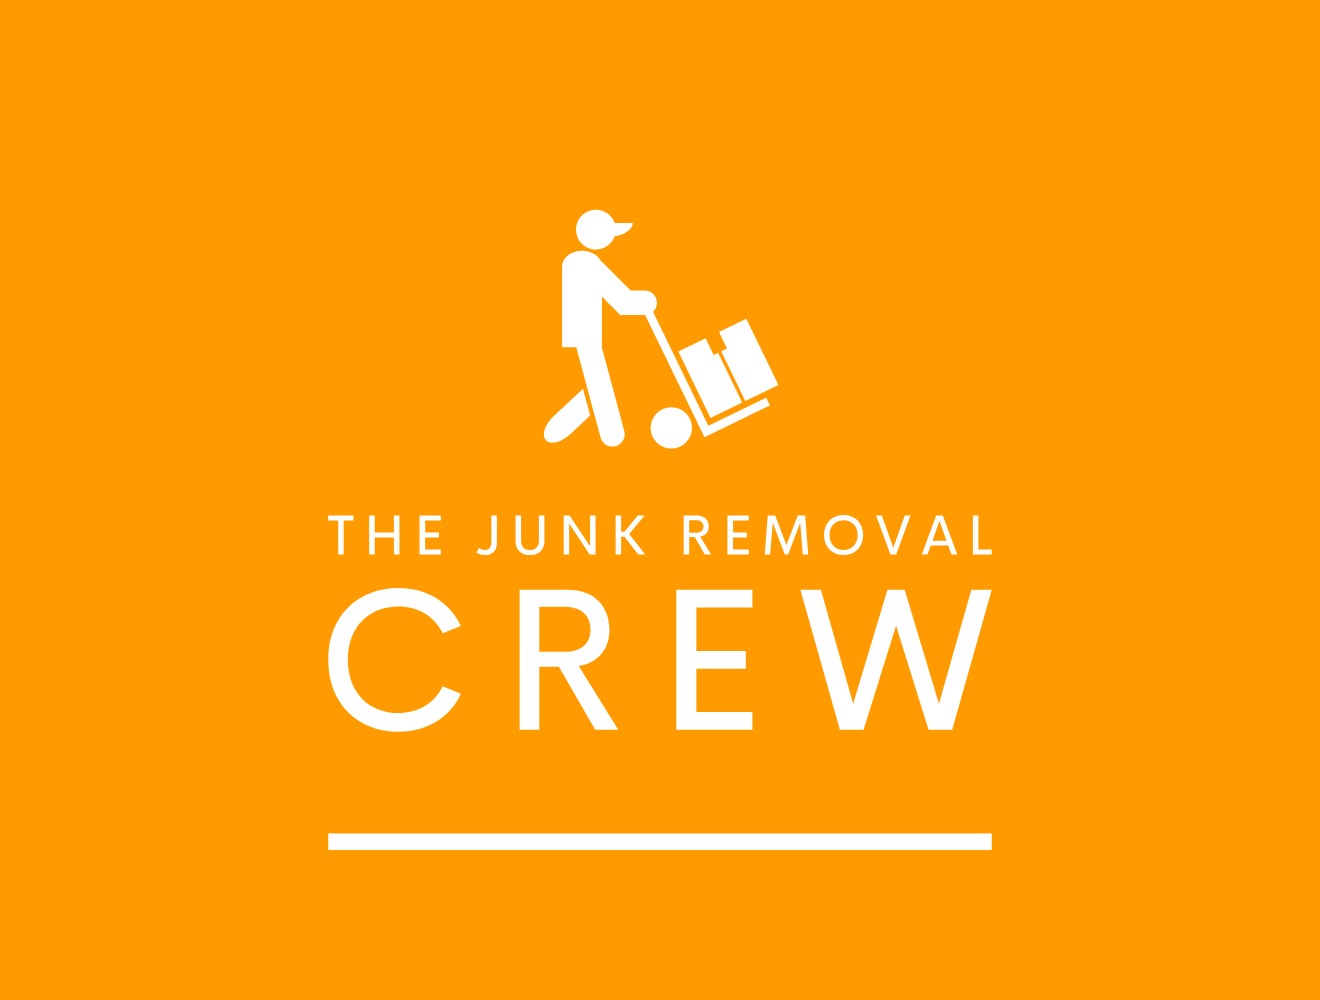 The Junk Removal Crew 74 Bleecker St, Gloversville New York 12078